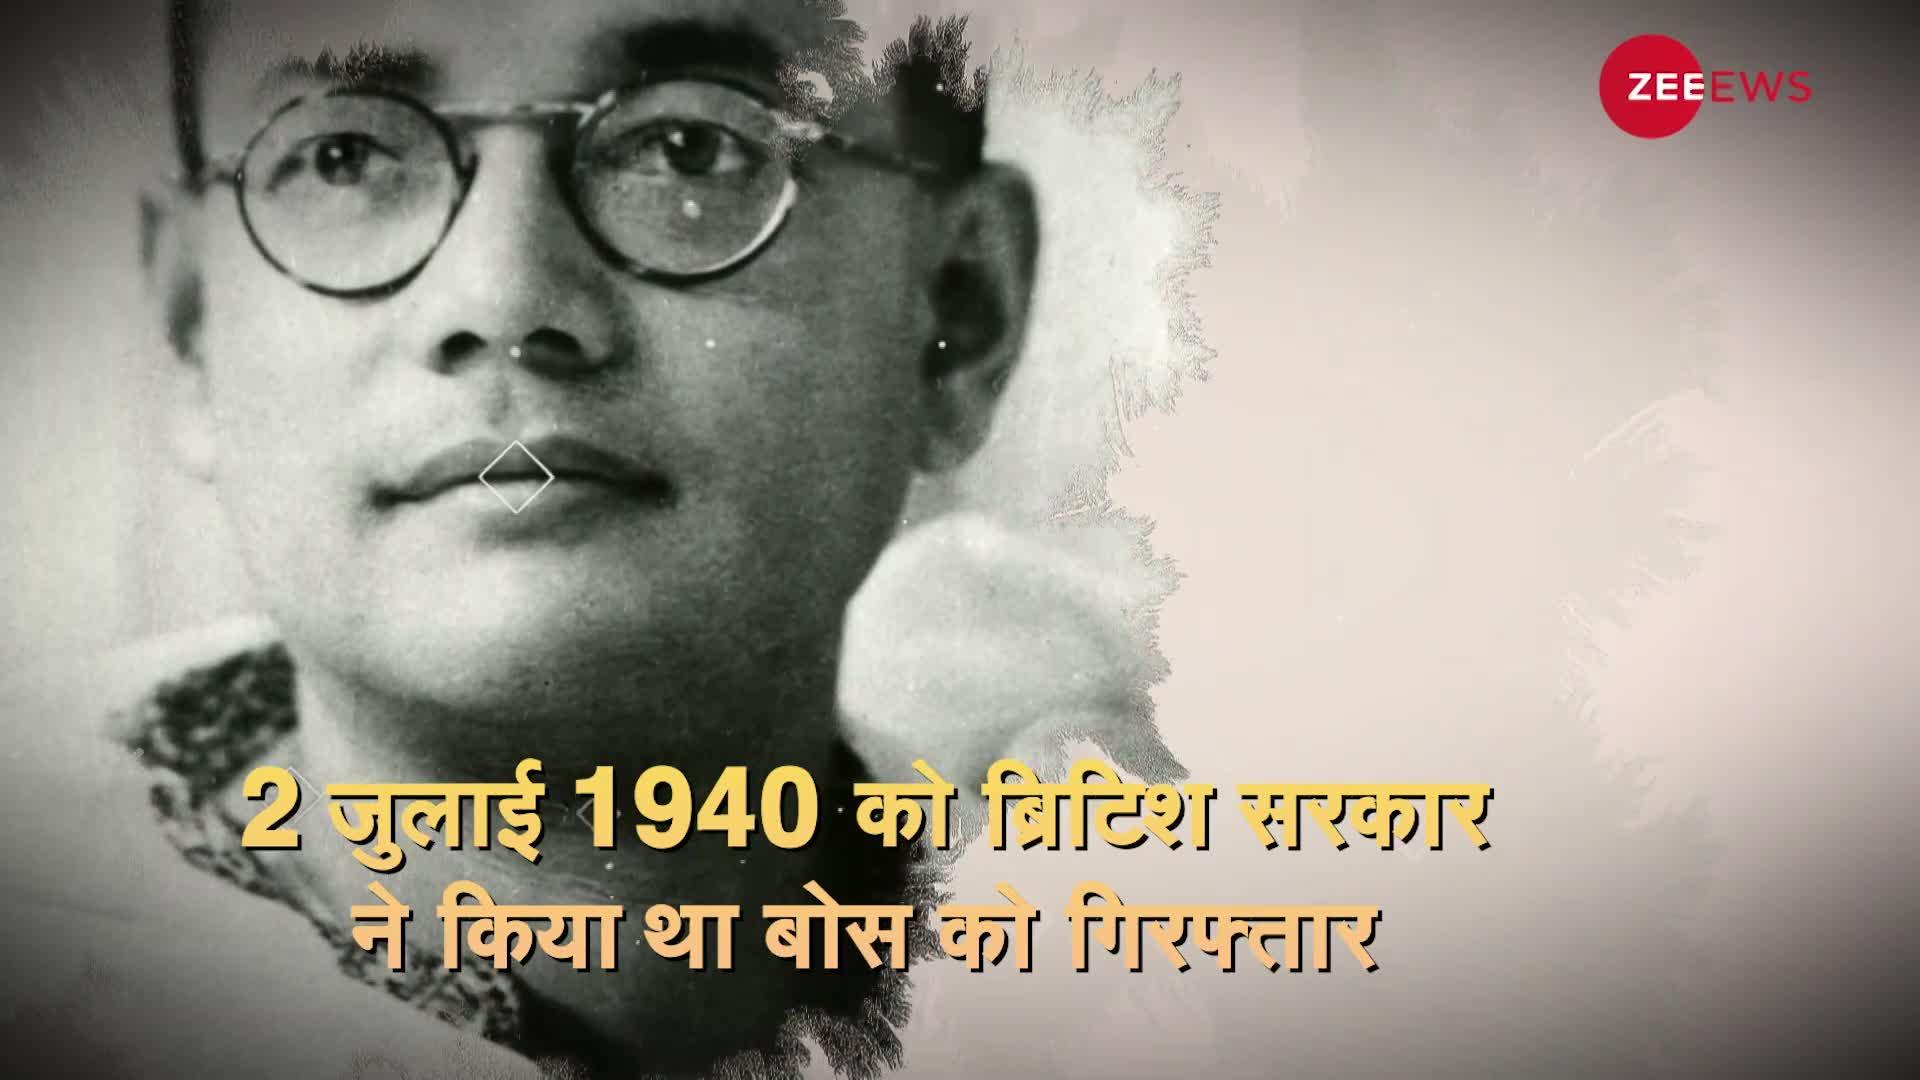 History: 2 July 1940 को Subhash Chandra Bose क्यों हुए थे गिरफ्तार?